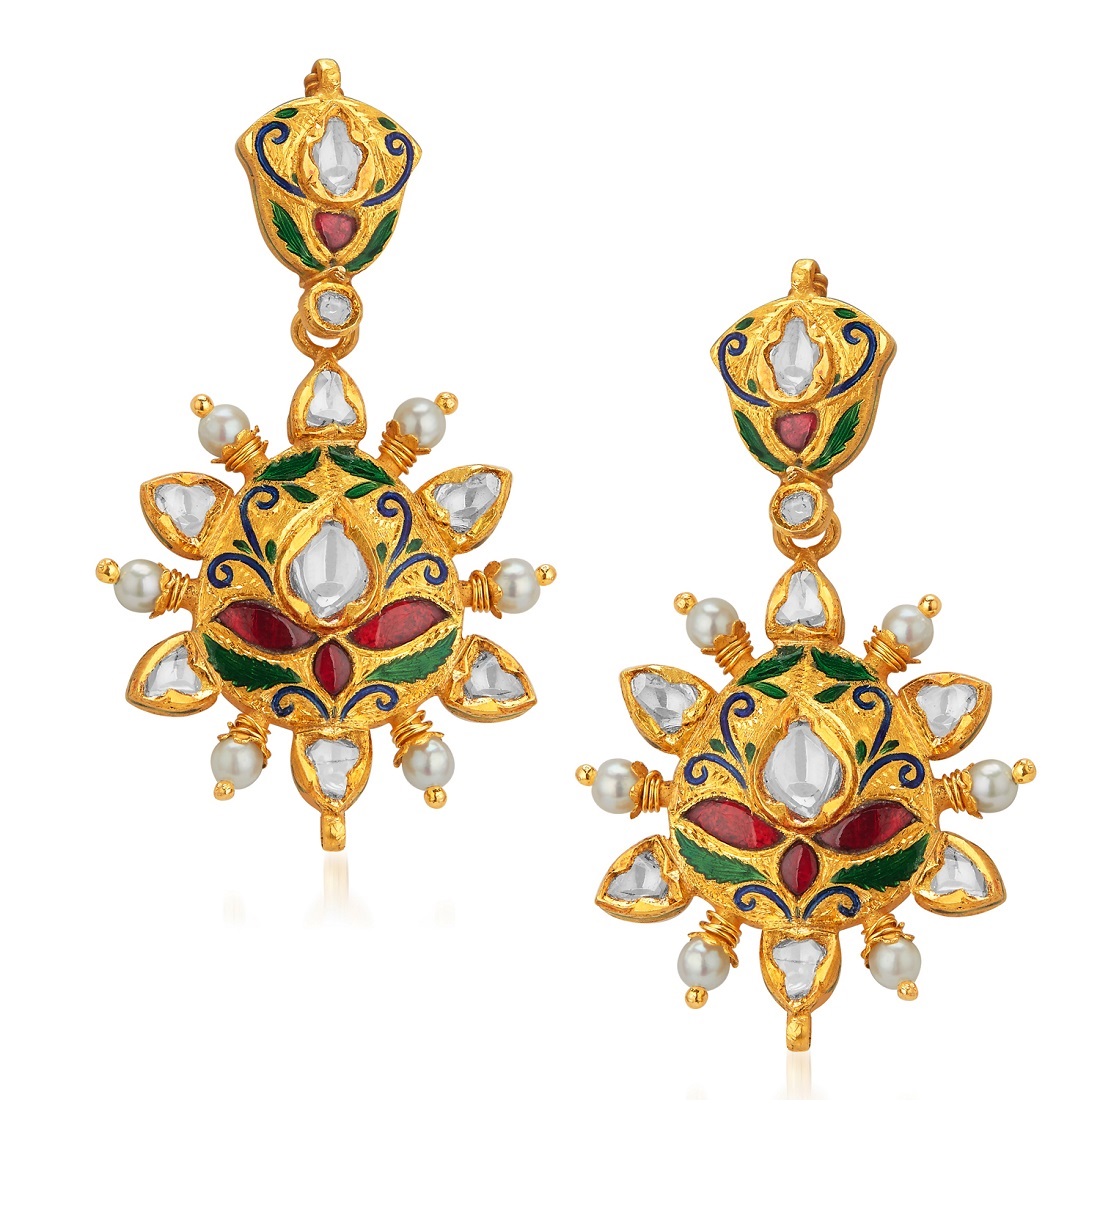 Rajasthani Meenakari Jewellery Work of India